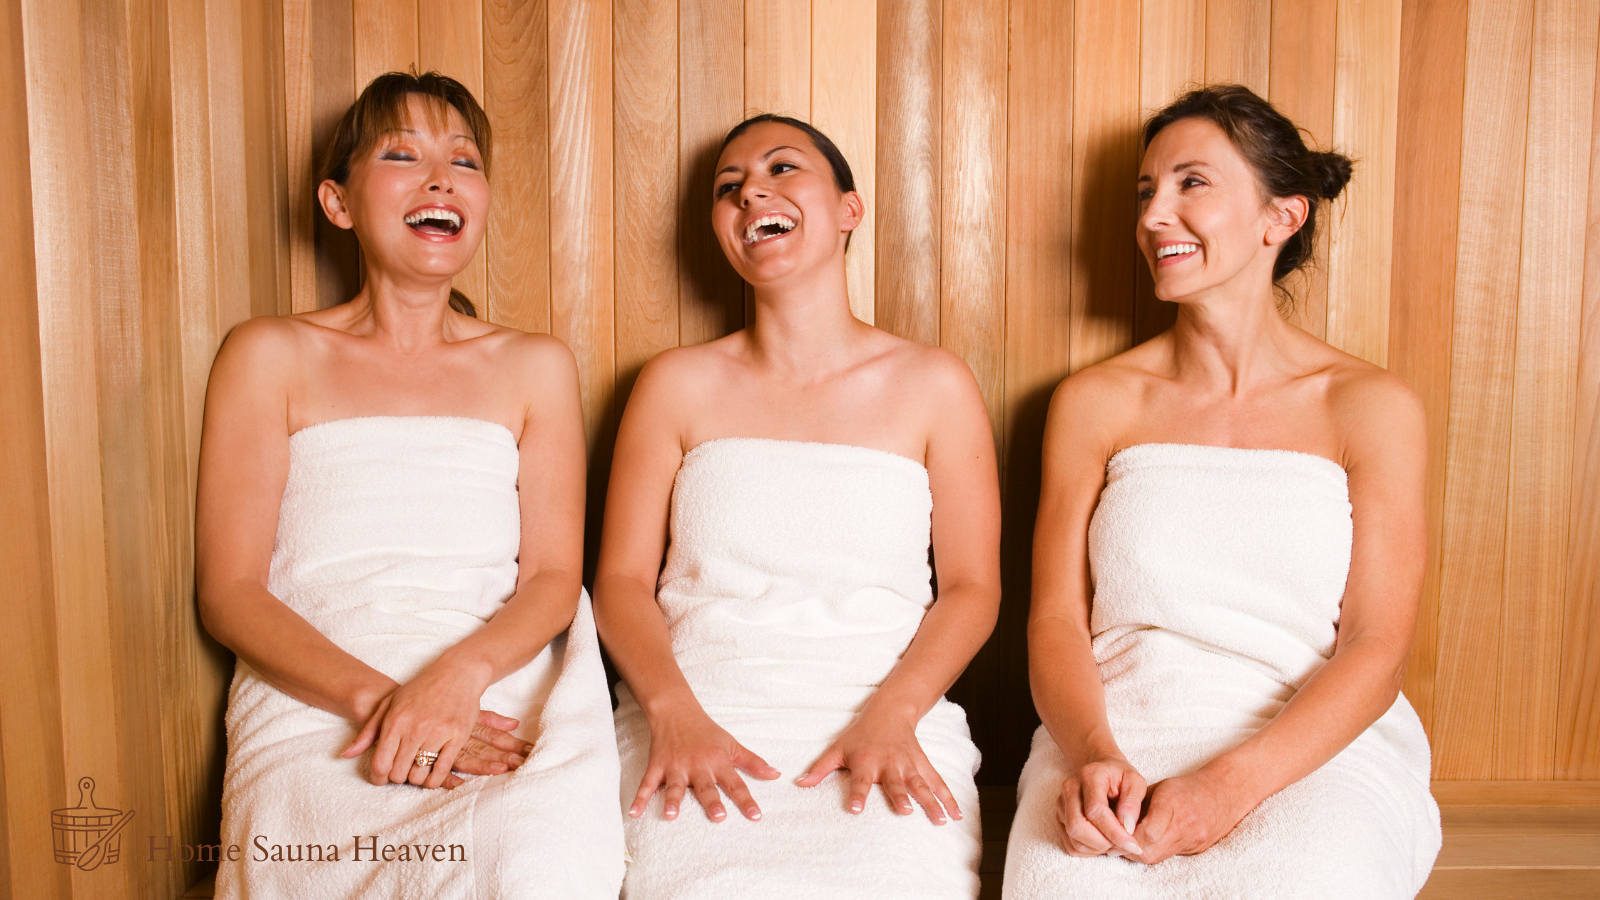 three women following the rules of public saunas